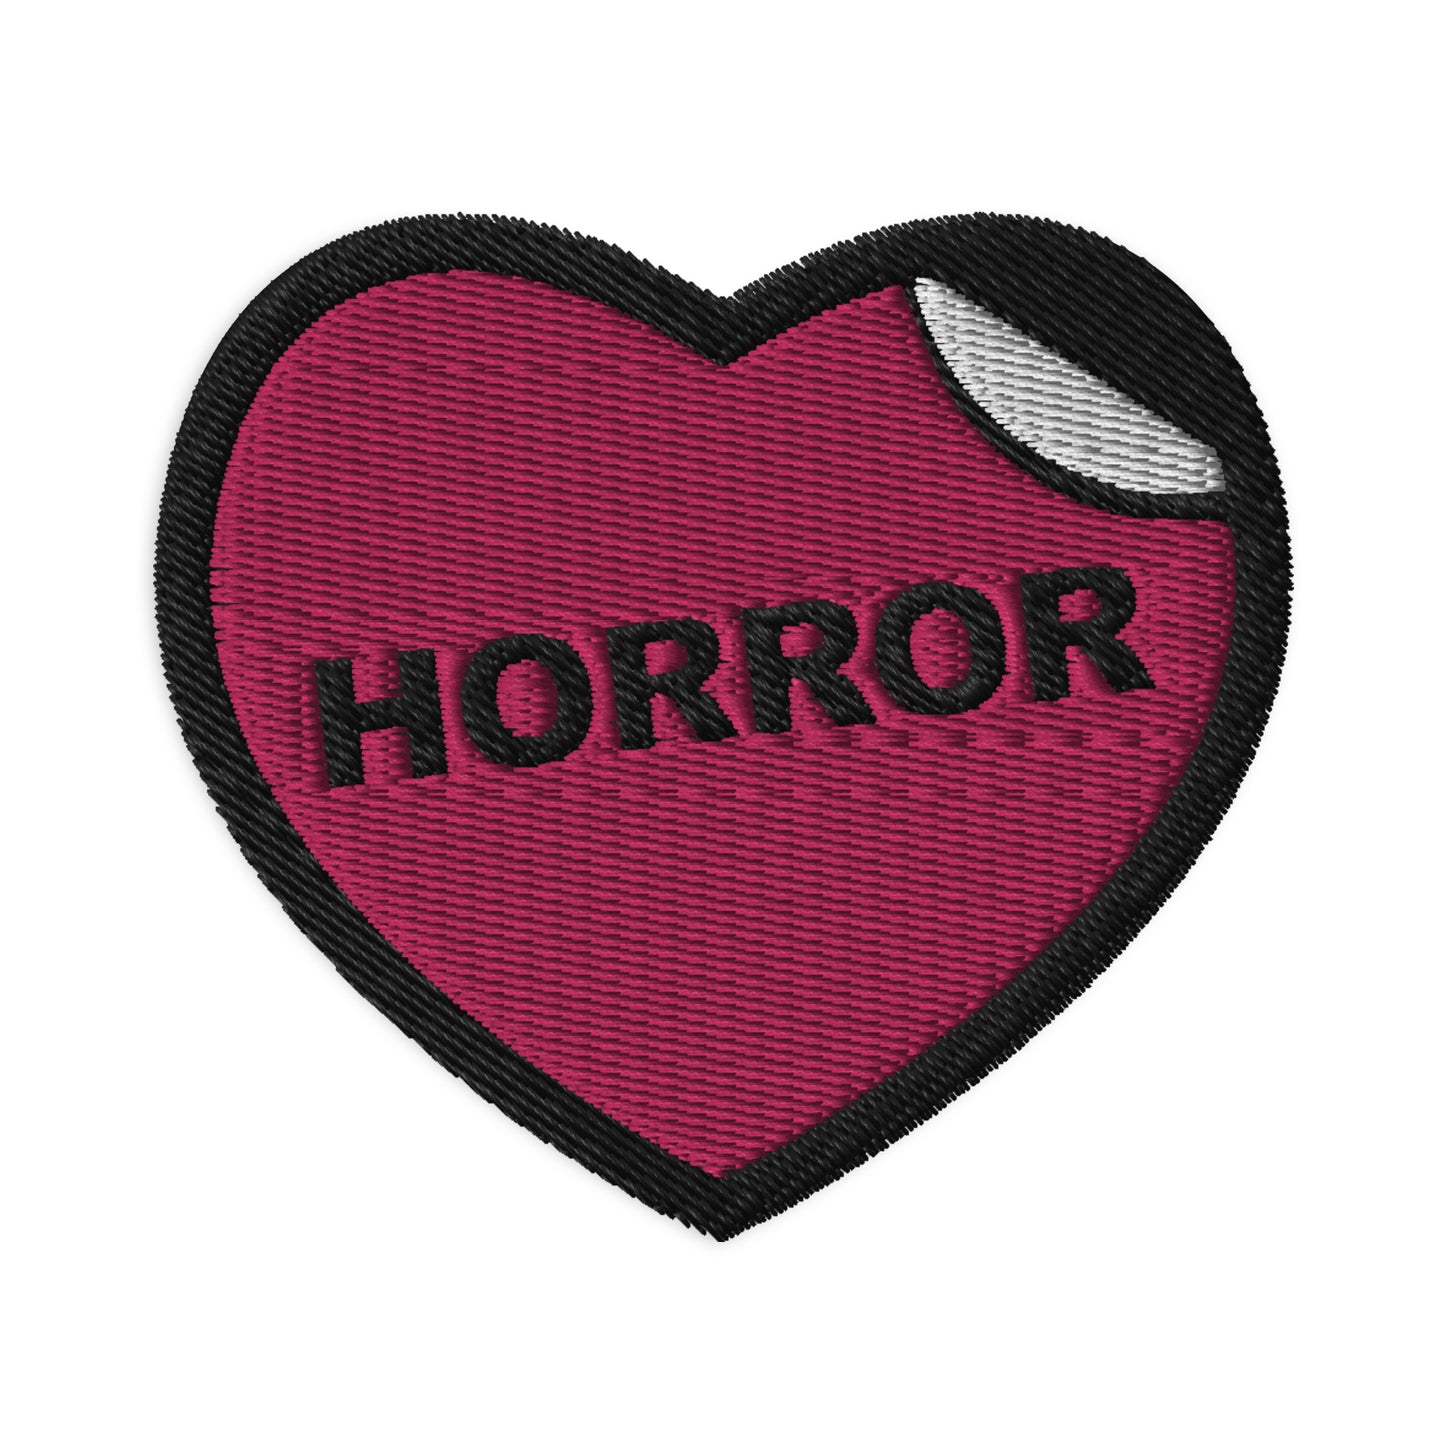 Horror Heart patch